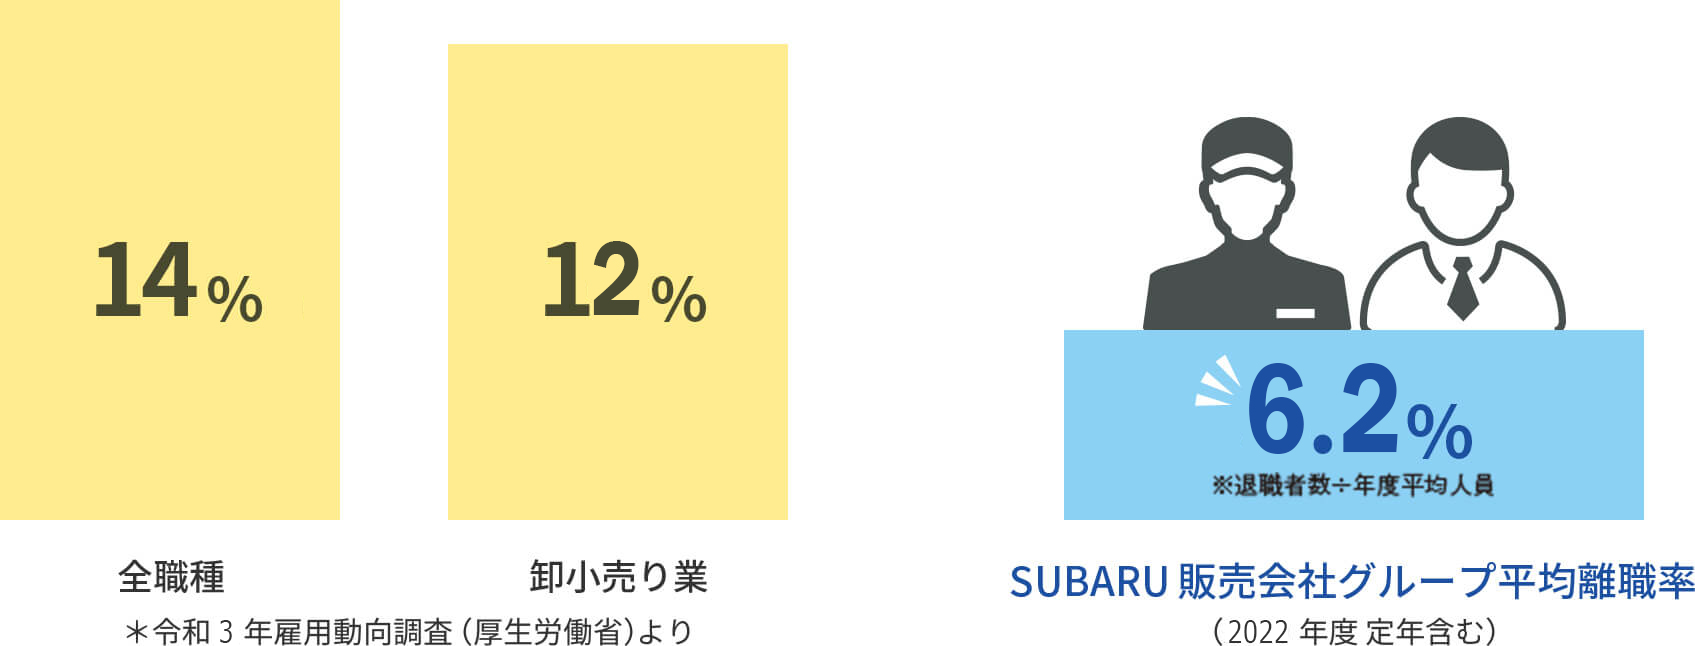 SUBARU販売会社グループ平均離職率